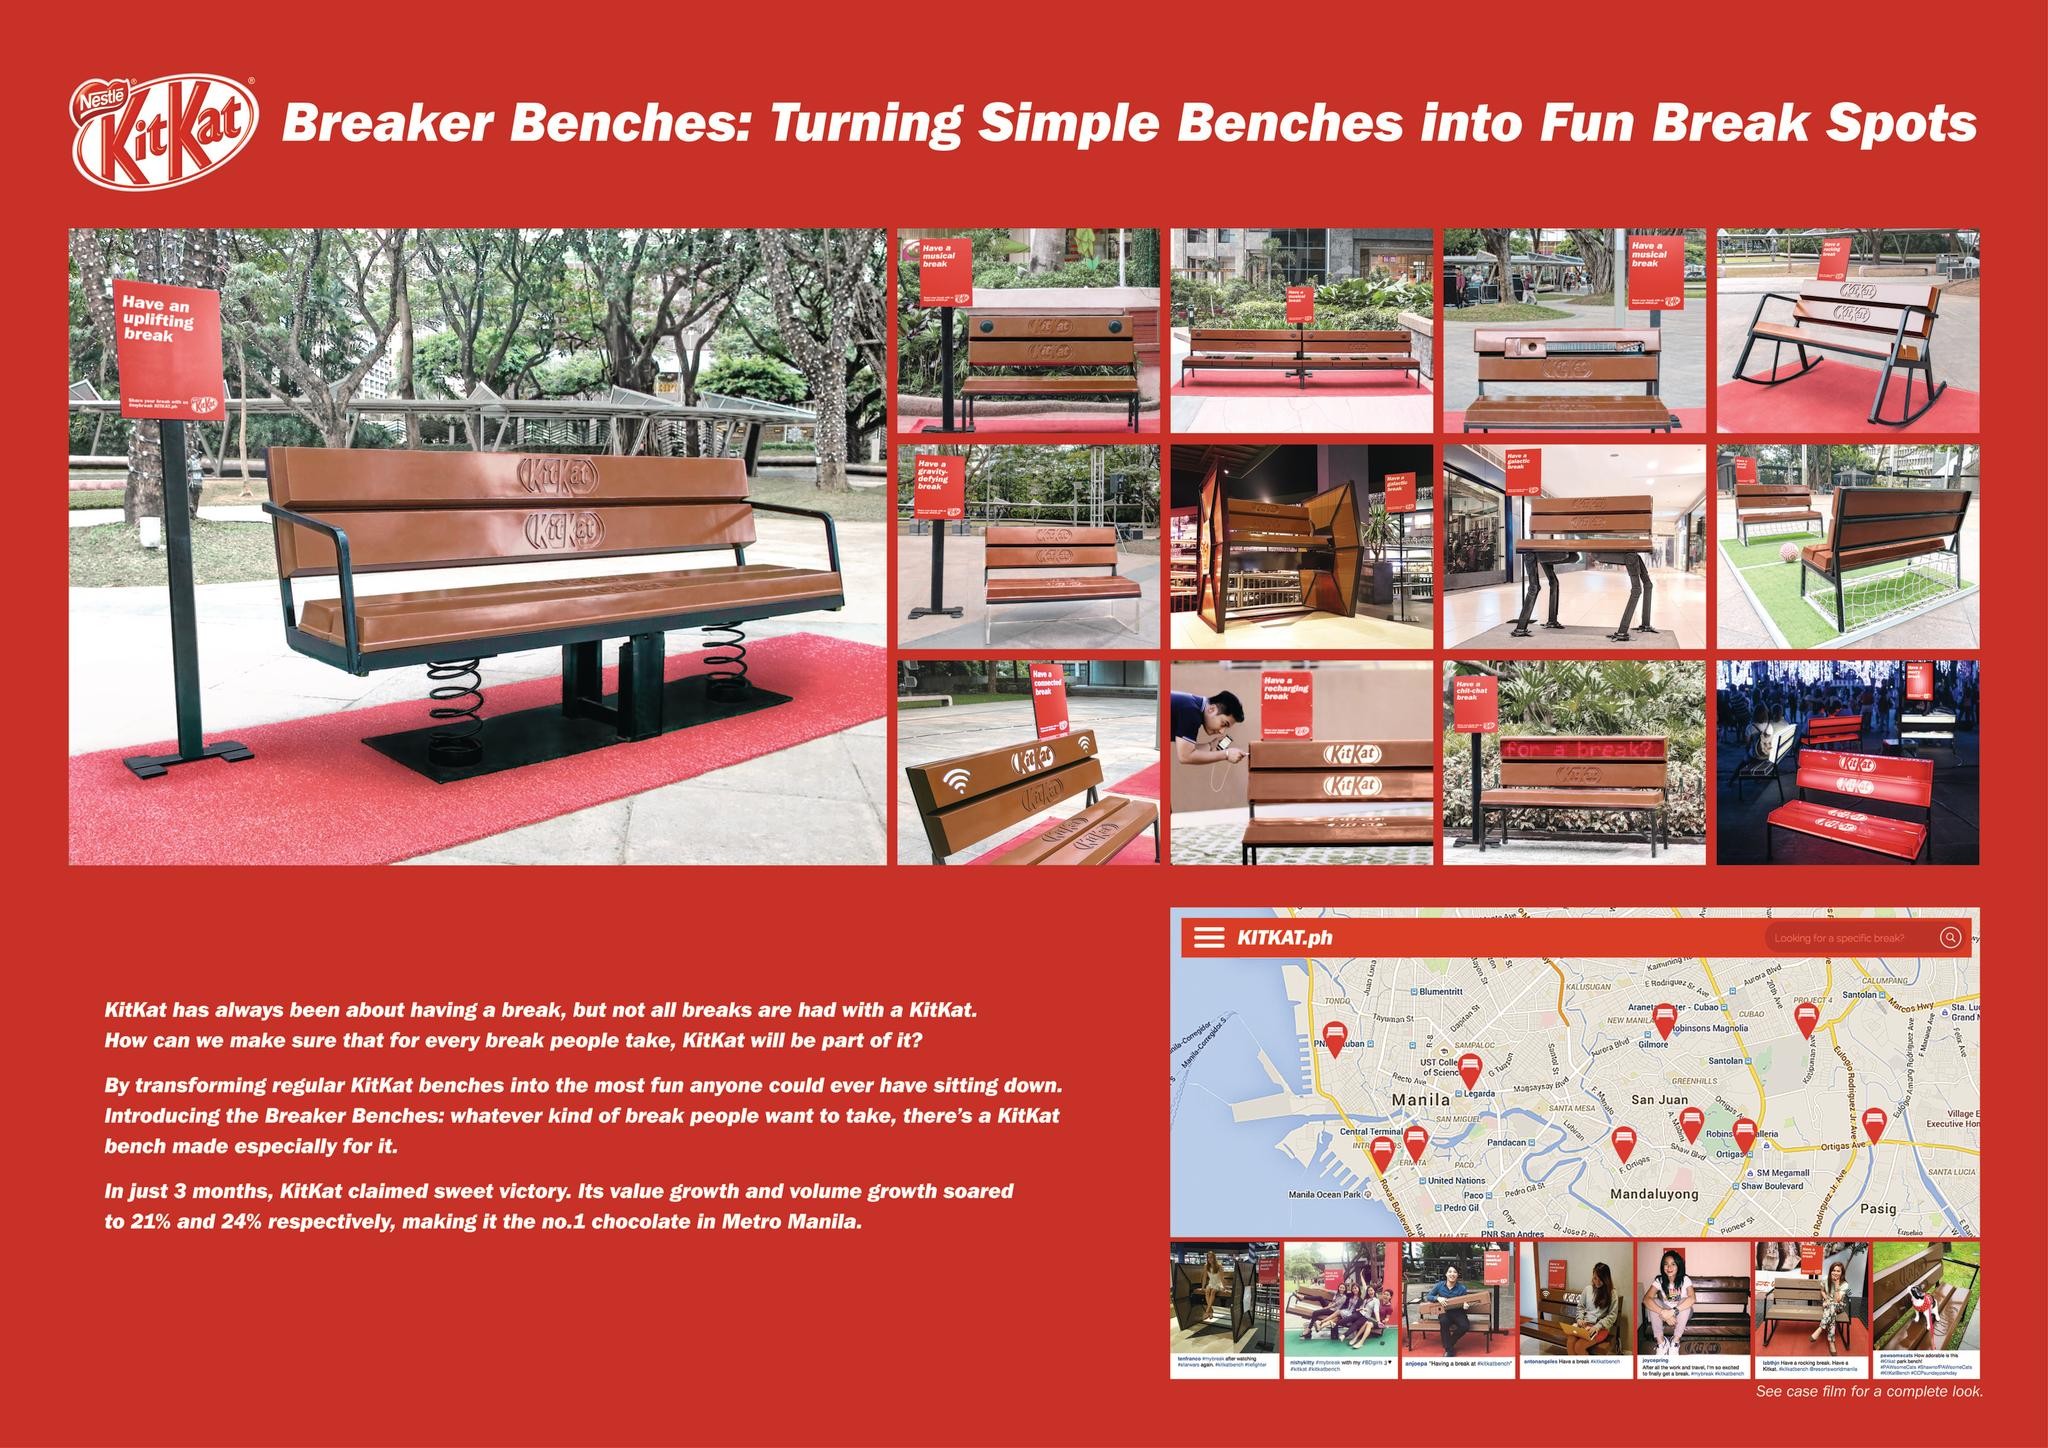 Breaker Benches